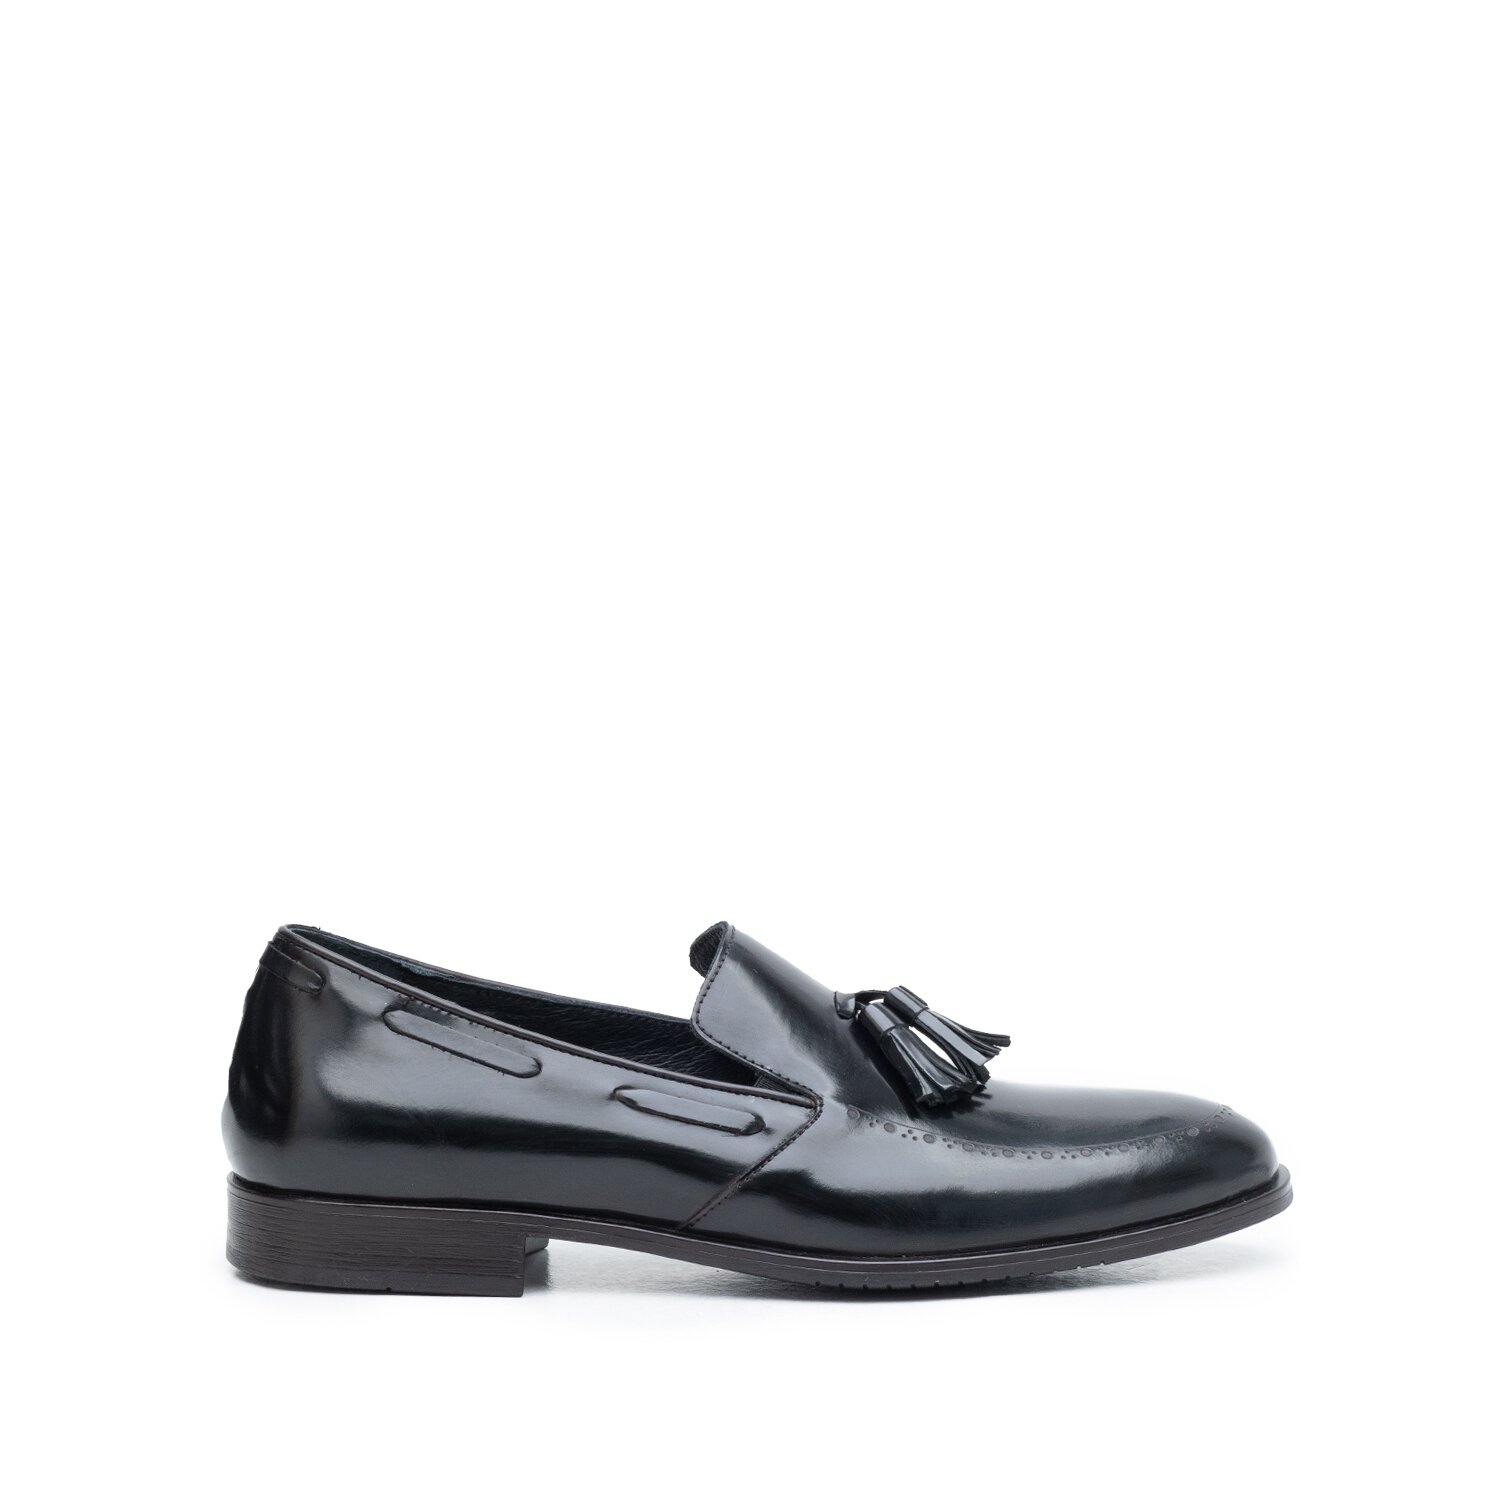 Pantofi barbati eleganti din piele naturala cu ciucuri, Leofex - 515 Negru Florantic